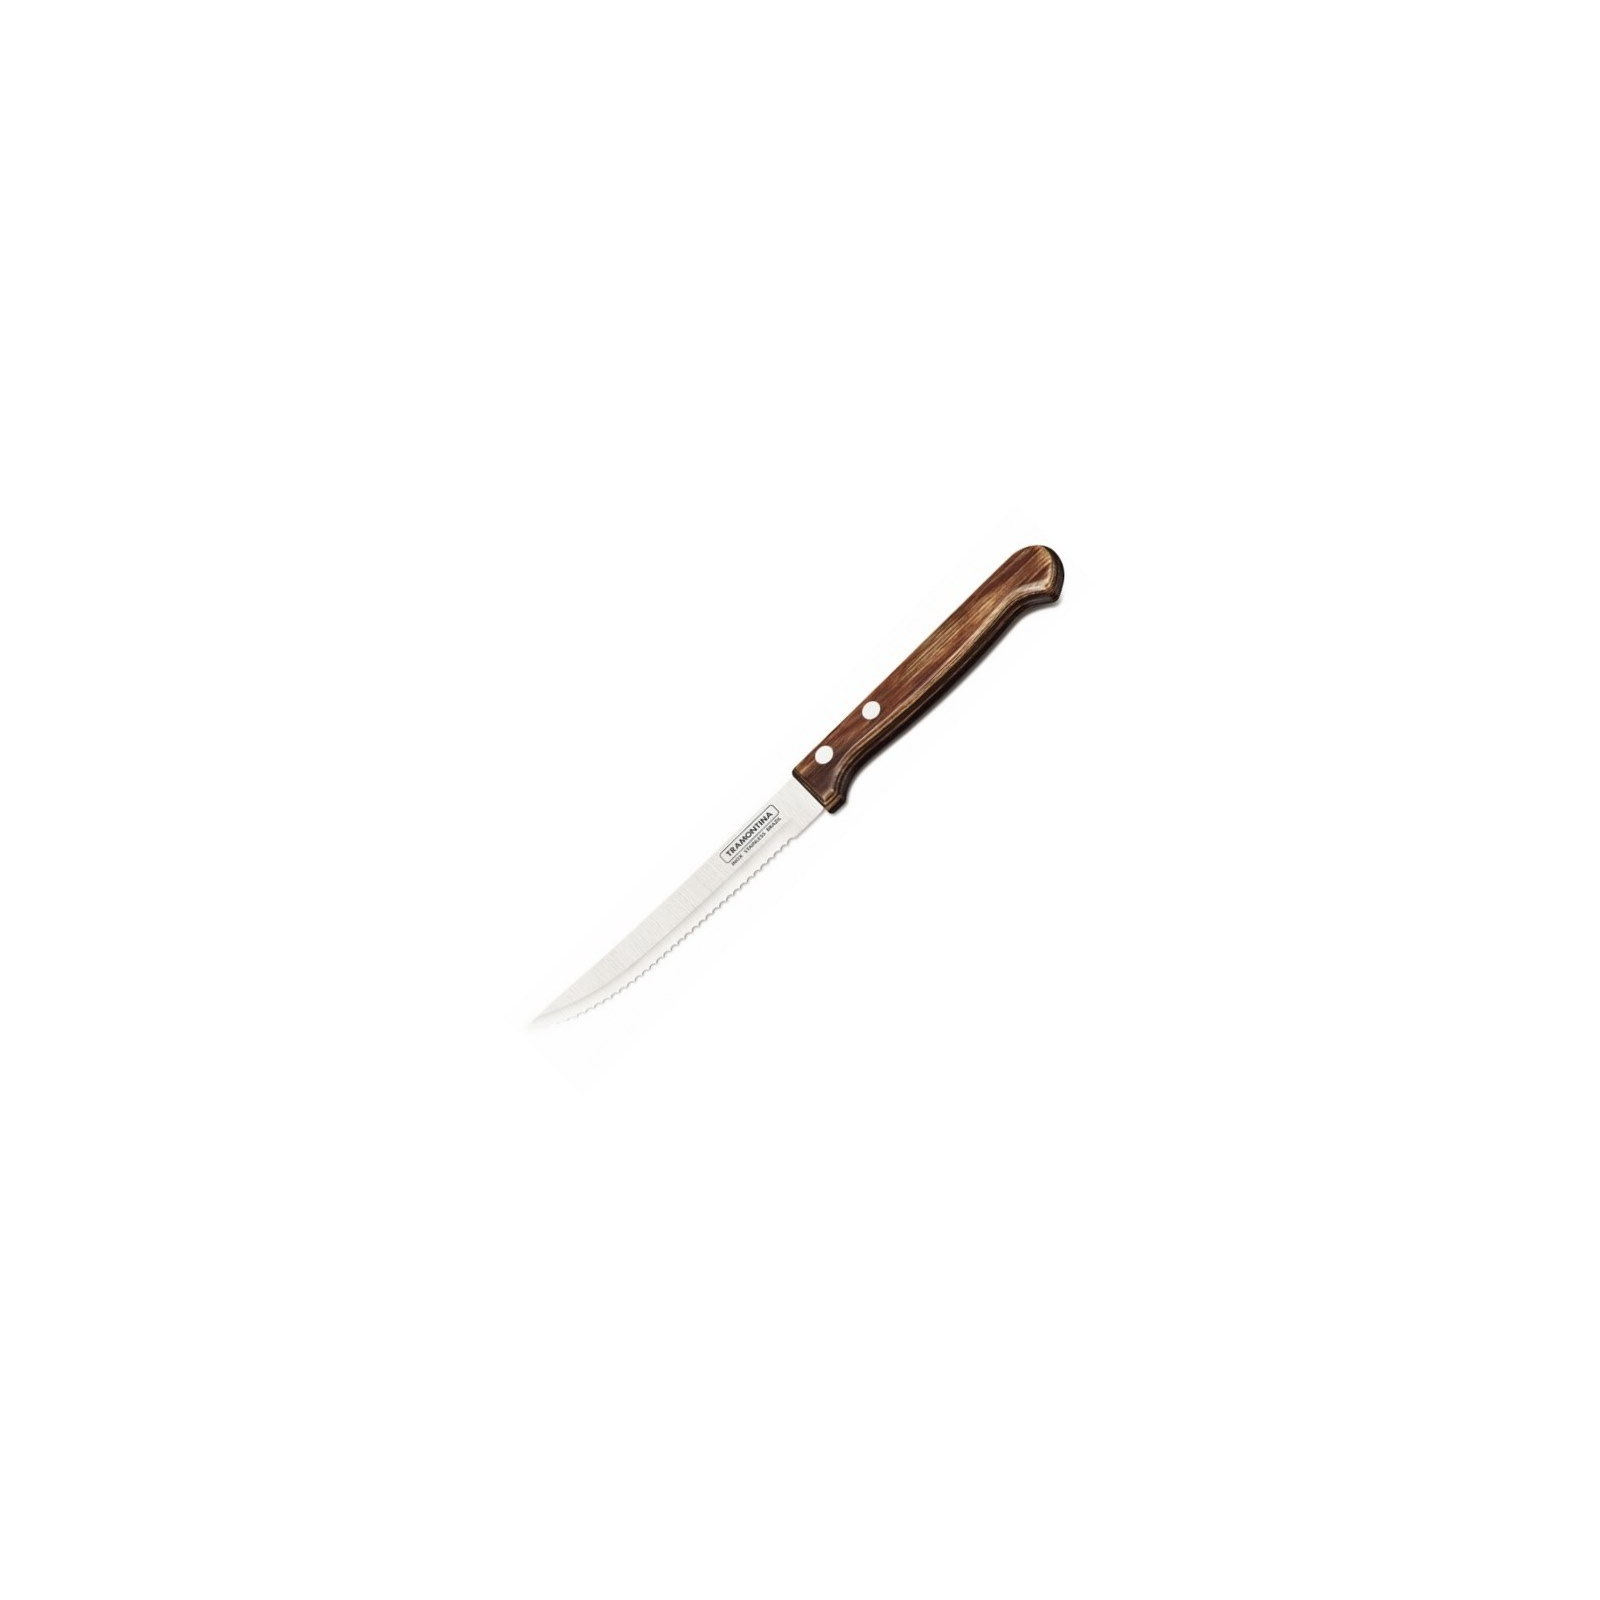 Столовый нож Tramontina Polywood для стейка 127 мм 1 шт Горіх (21100/495)